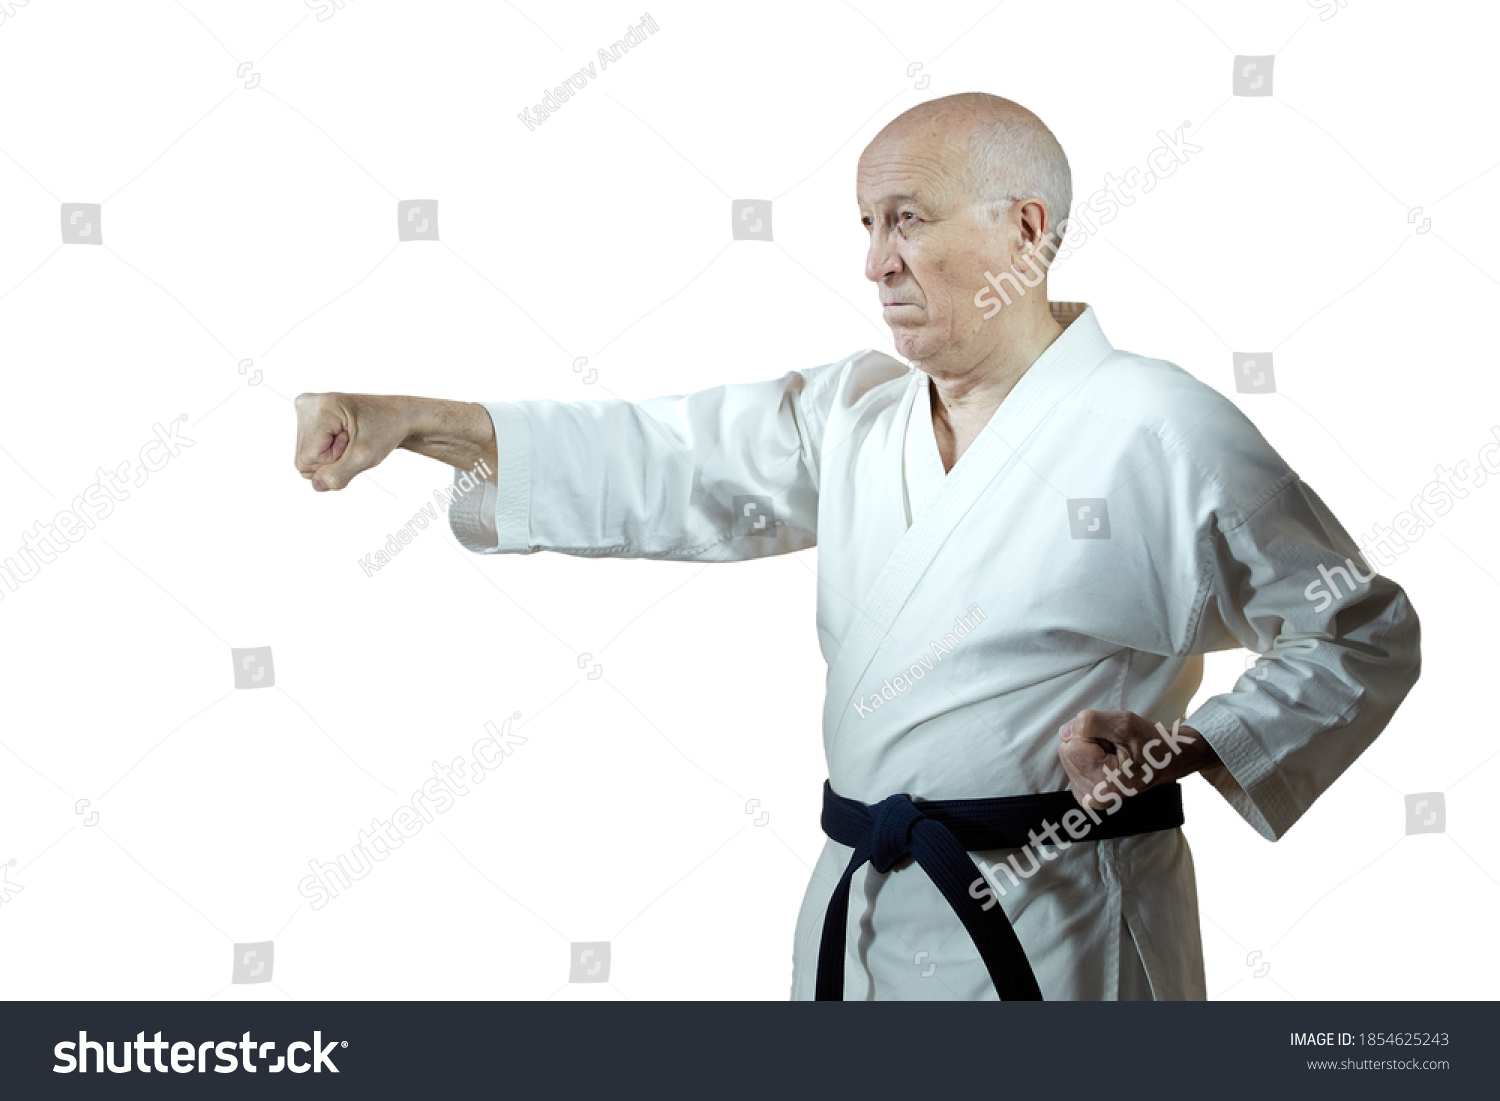 On white isolated background old man athlete in karategi beats hand punch #1854625243